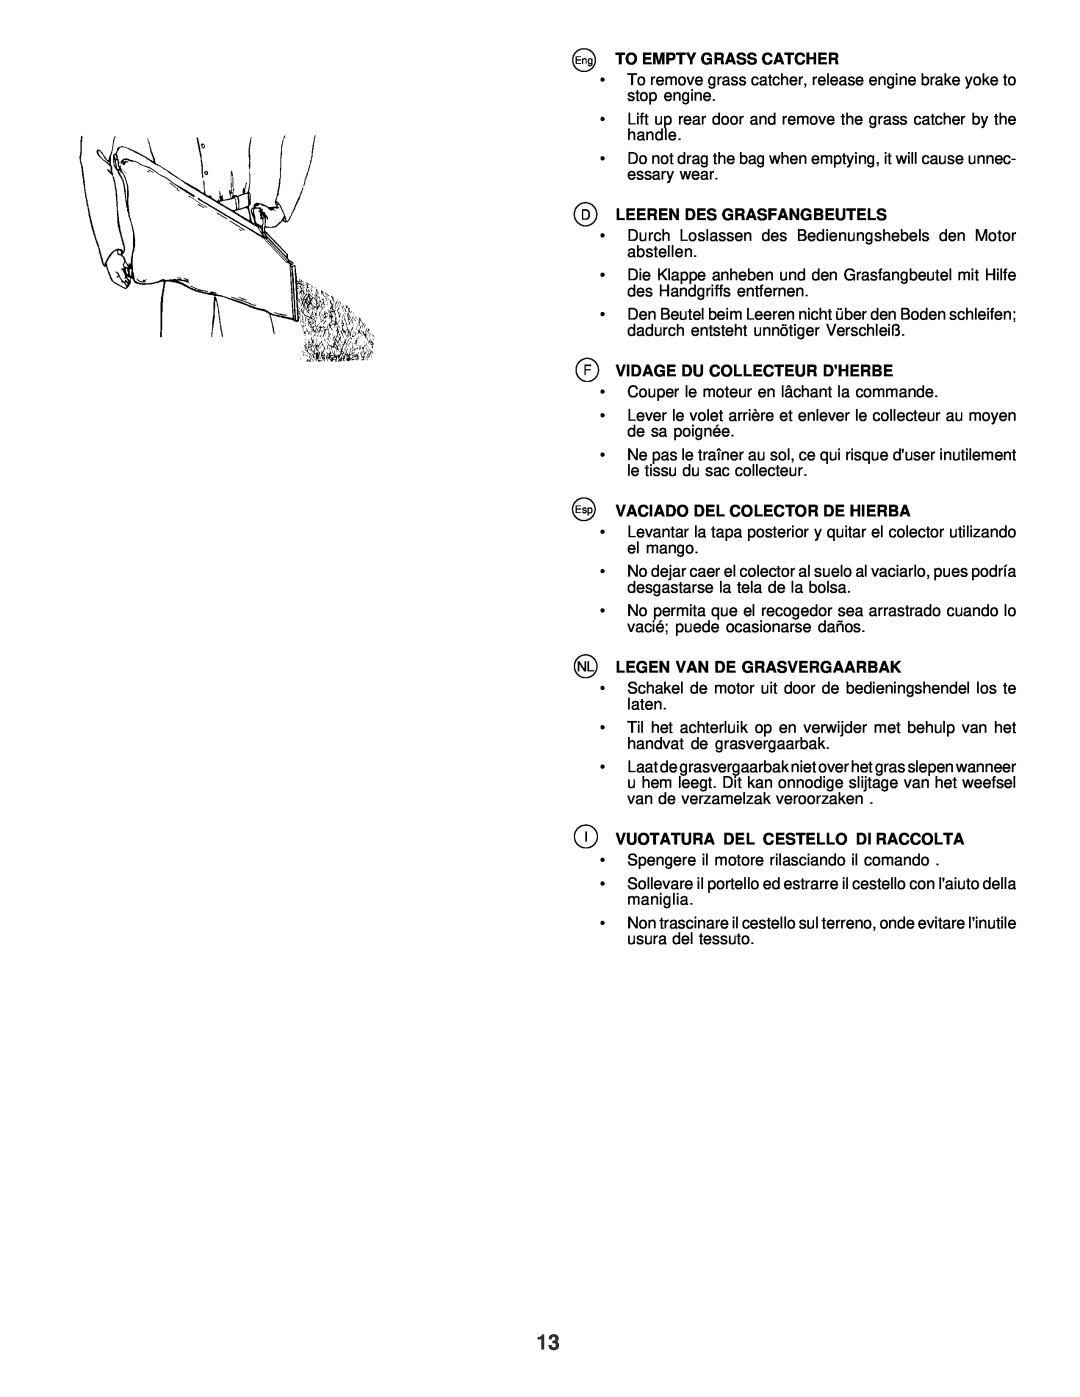 Husqvarna R52 instruction manual Eng TO EMPTY GRASS CATCHER, Dleeren Des Grasfangbeutels, Fvidage Du Collecteur Dherbe 